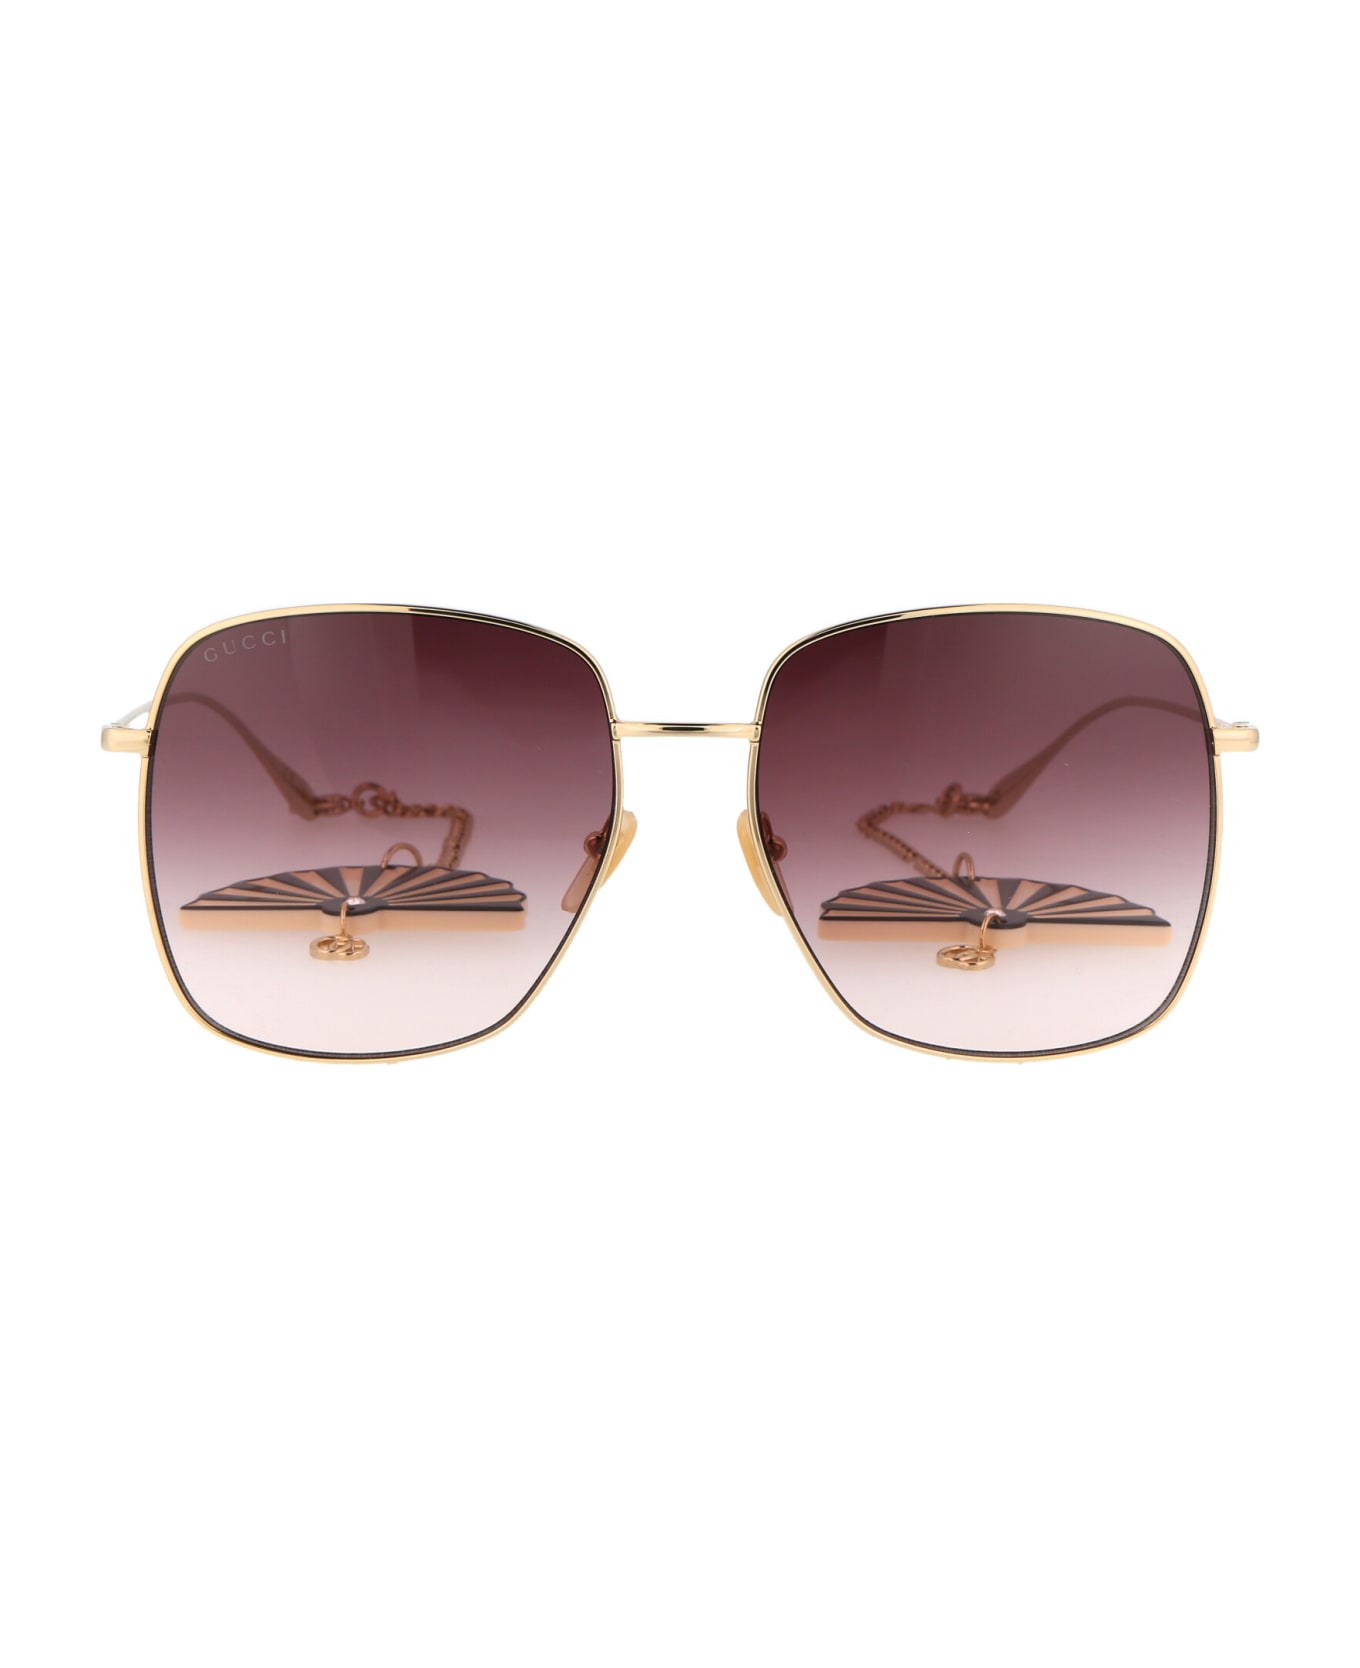 Gucci Eyewear Gg1031s Sunglasses - 010 GOLD GOLD RED